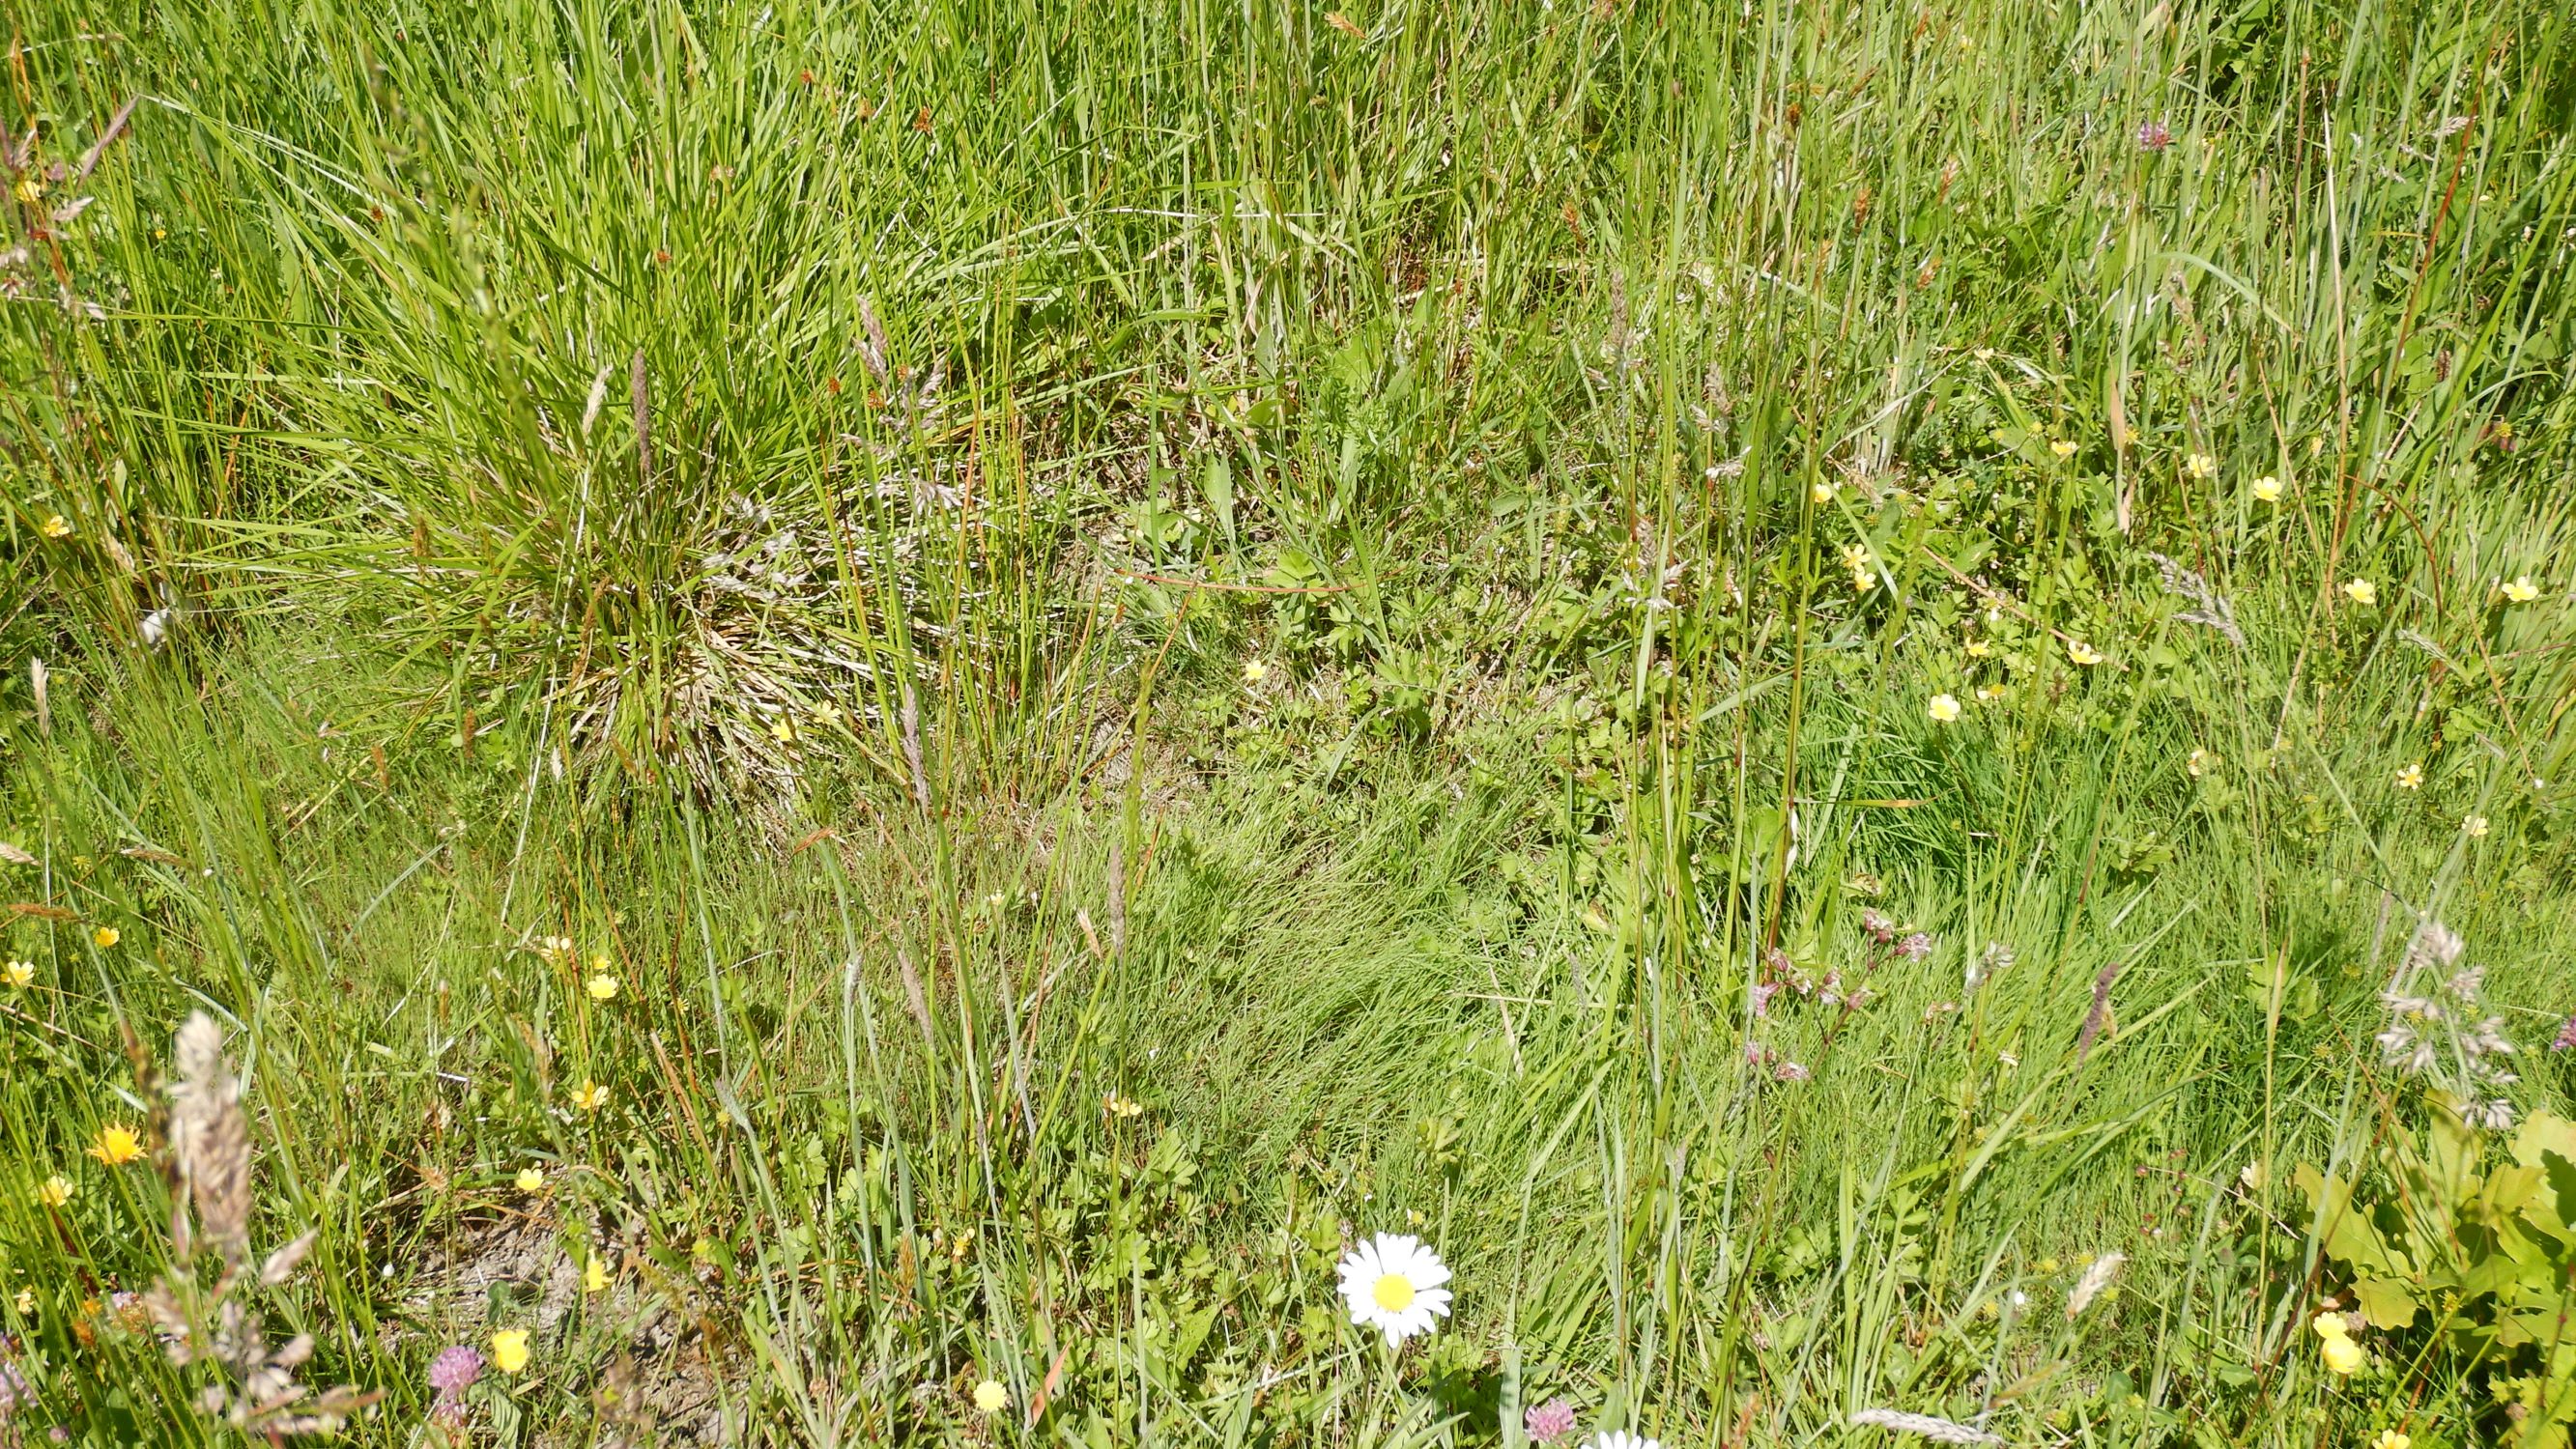 DSCN6952 leithagebirge breitenbrunn, hoadl, 2002-06-05, wechselfeuchtstelle mit agrostis canina, juncus conglomeratus, deschampsia cespitosa und ranunculus repens.JPG